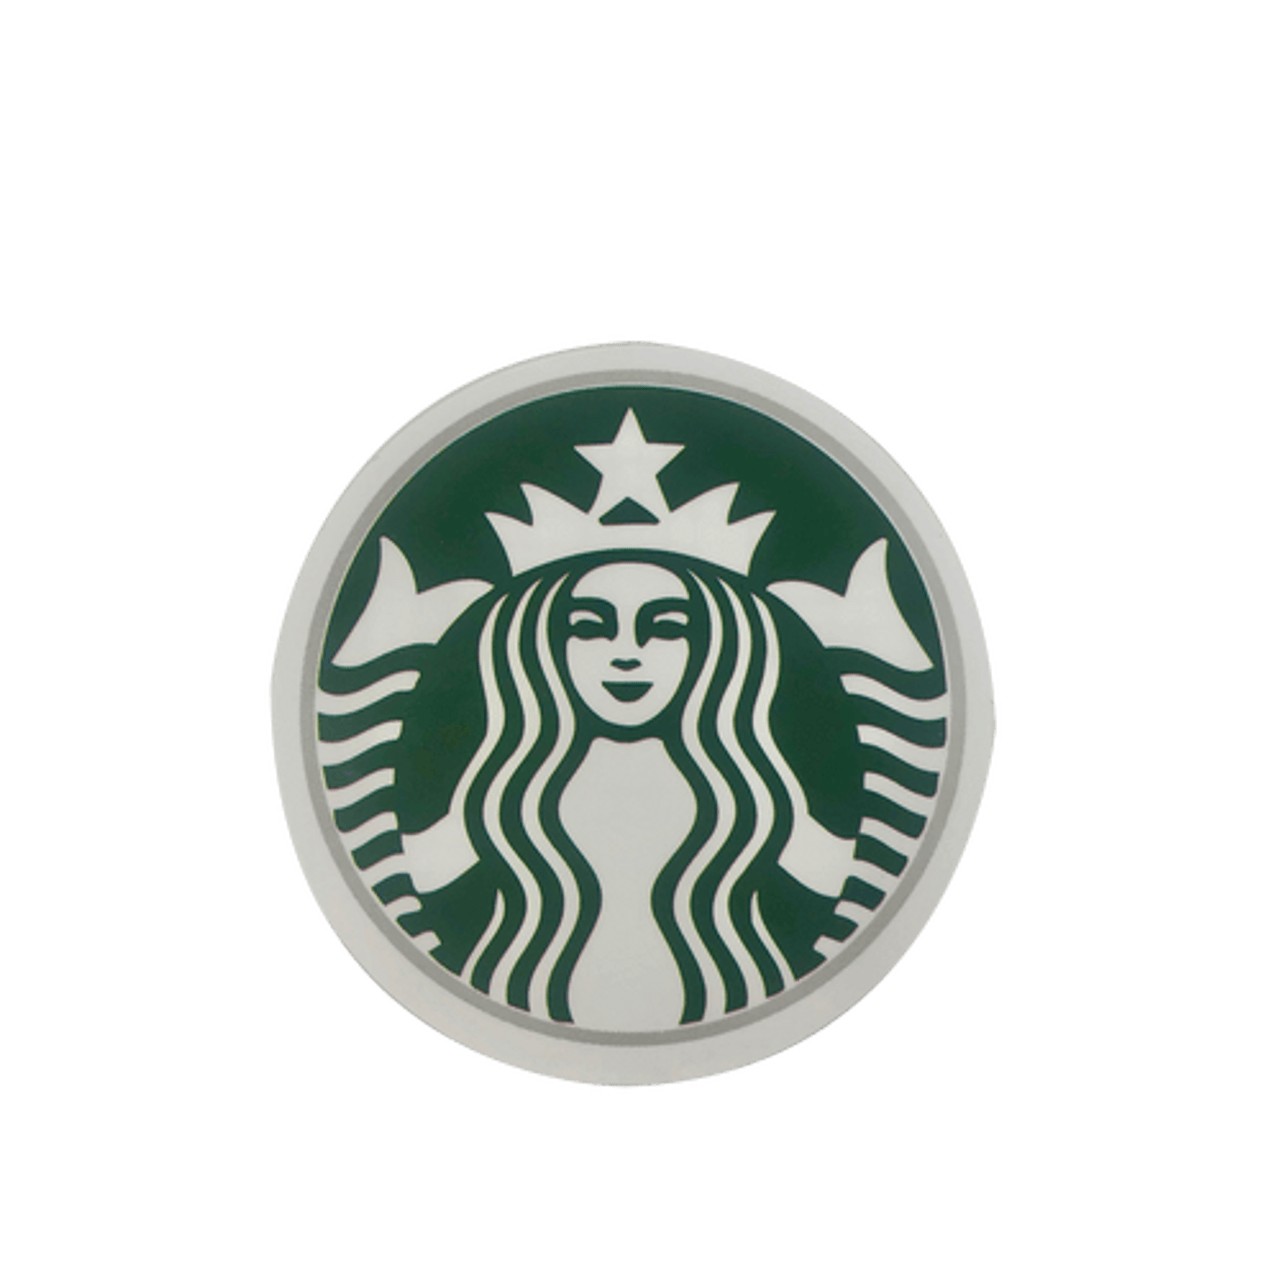 Starbucks Stickers for Sale - Pixels